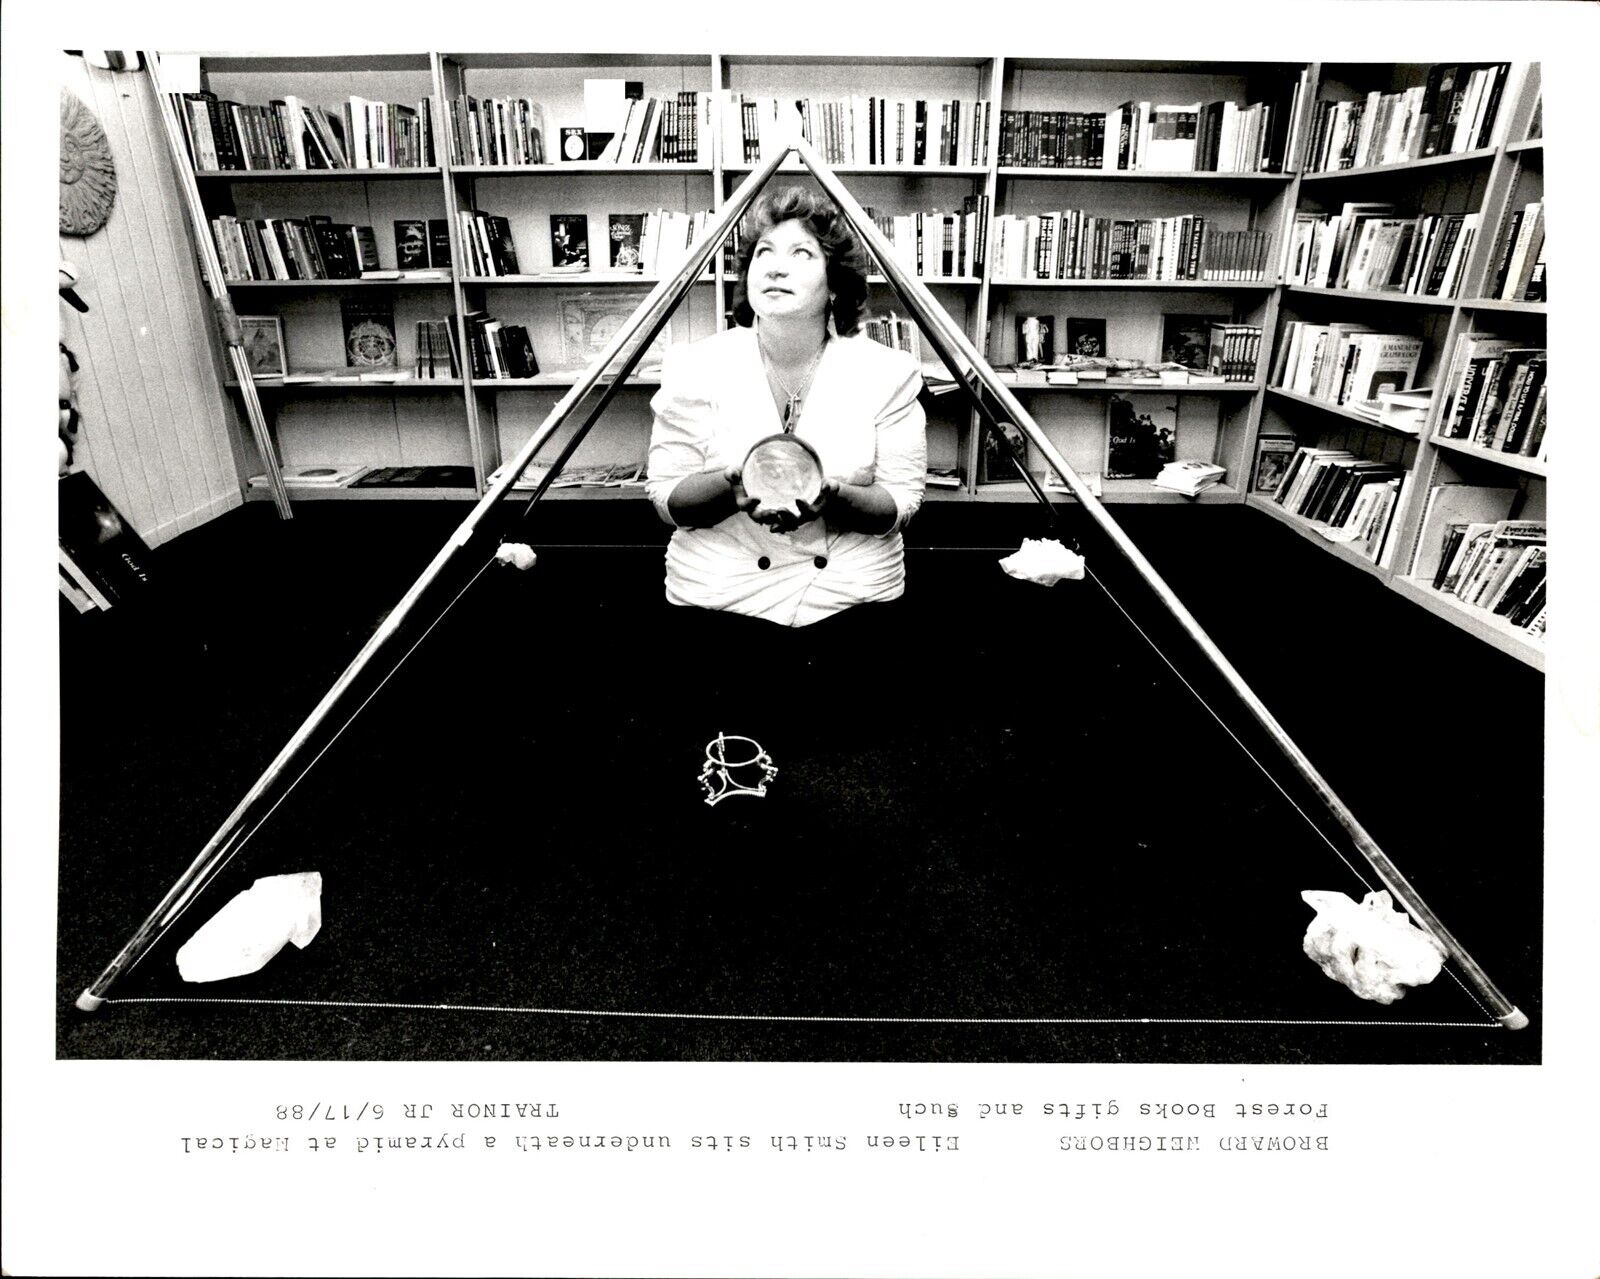 LG18 1988 Orig Trainor Jr Photo PYRAMID TREATMENT MAGICAL FOREST BOOKS MYSTICISM